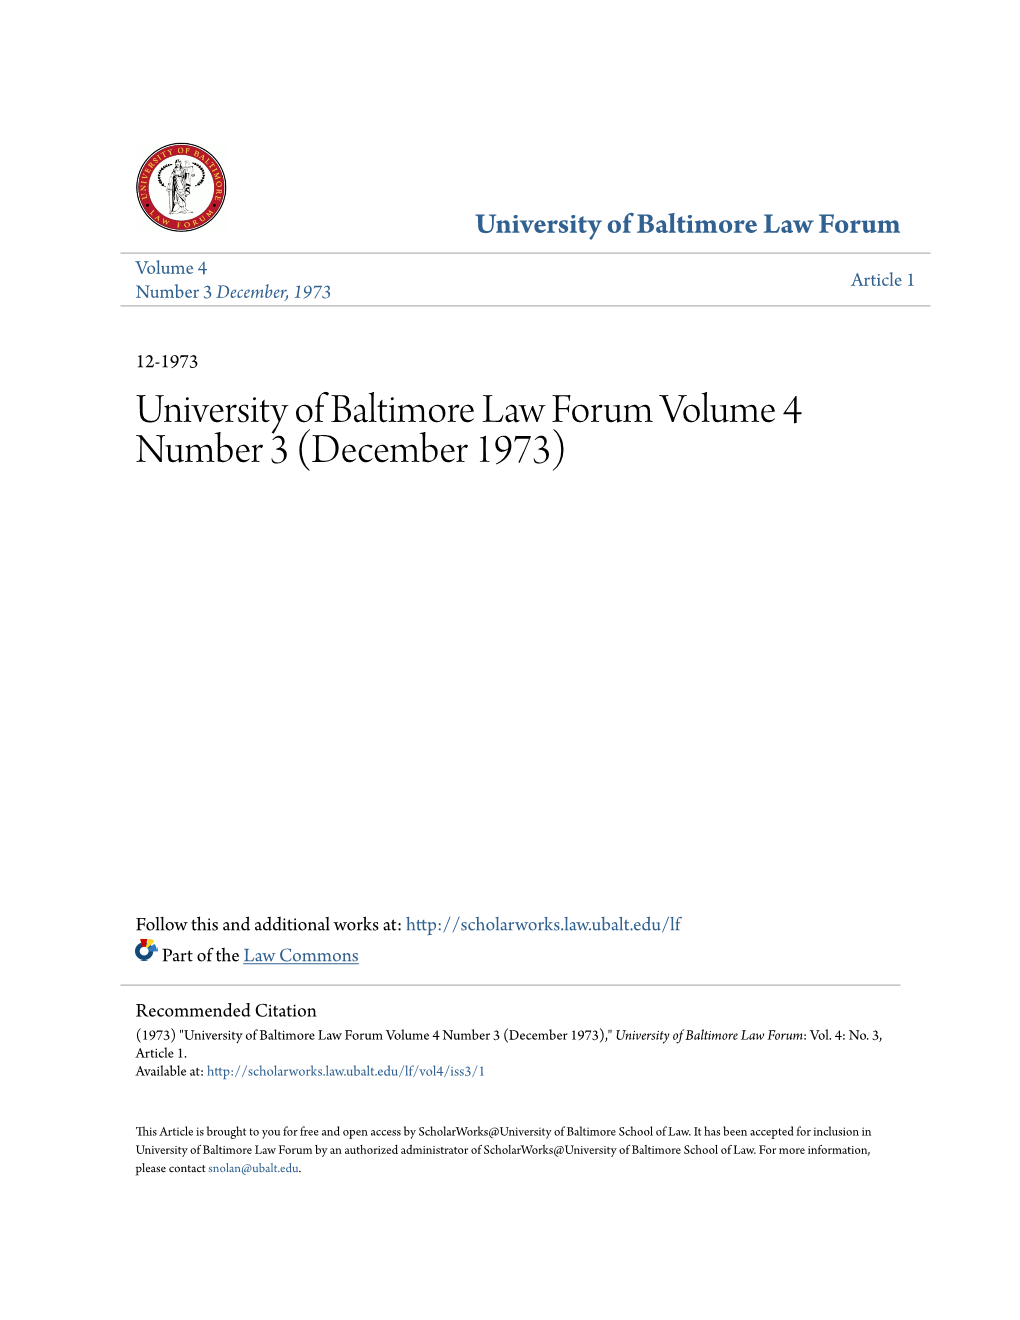 University of Baltimore Law Forum Volume 4 Number 3 (December 1973)